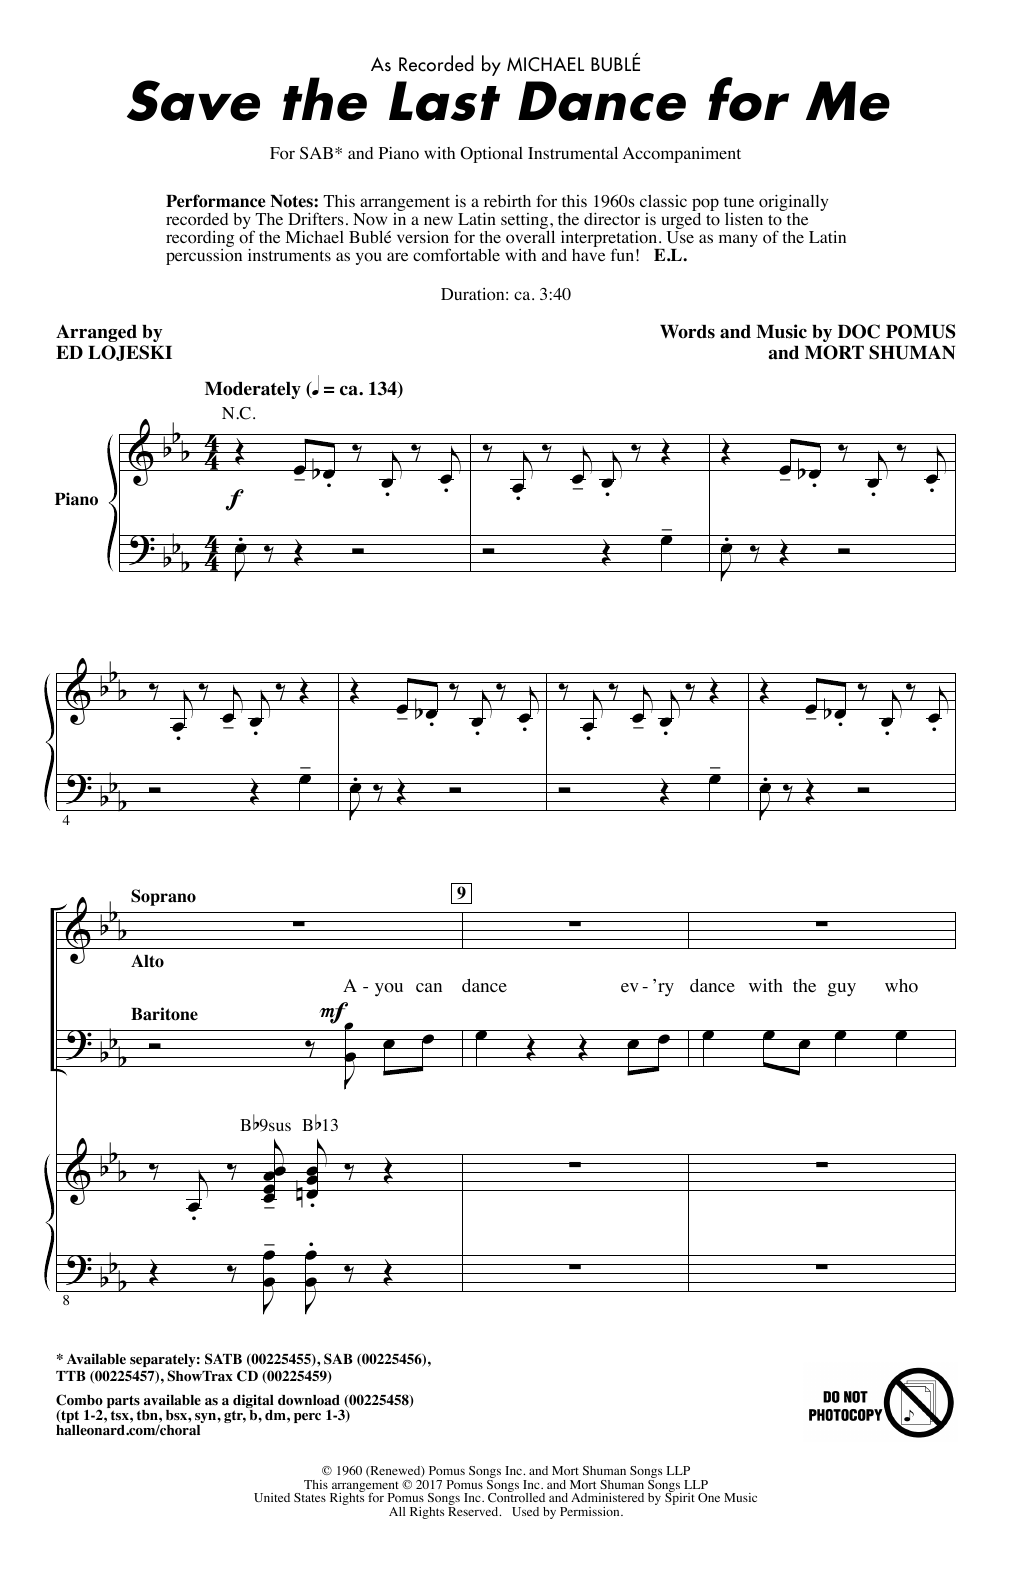 Michael Bublé Save The Last Dance For Me (arr. Ed Lojeski) Sheet Music Notes & Chords for TTBB - Download or Print PDF